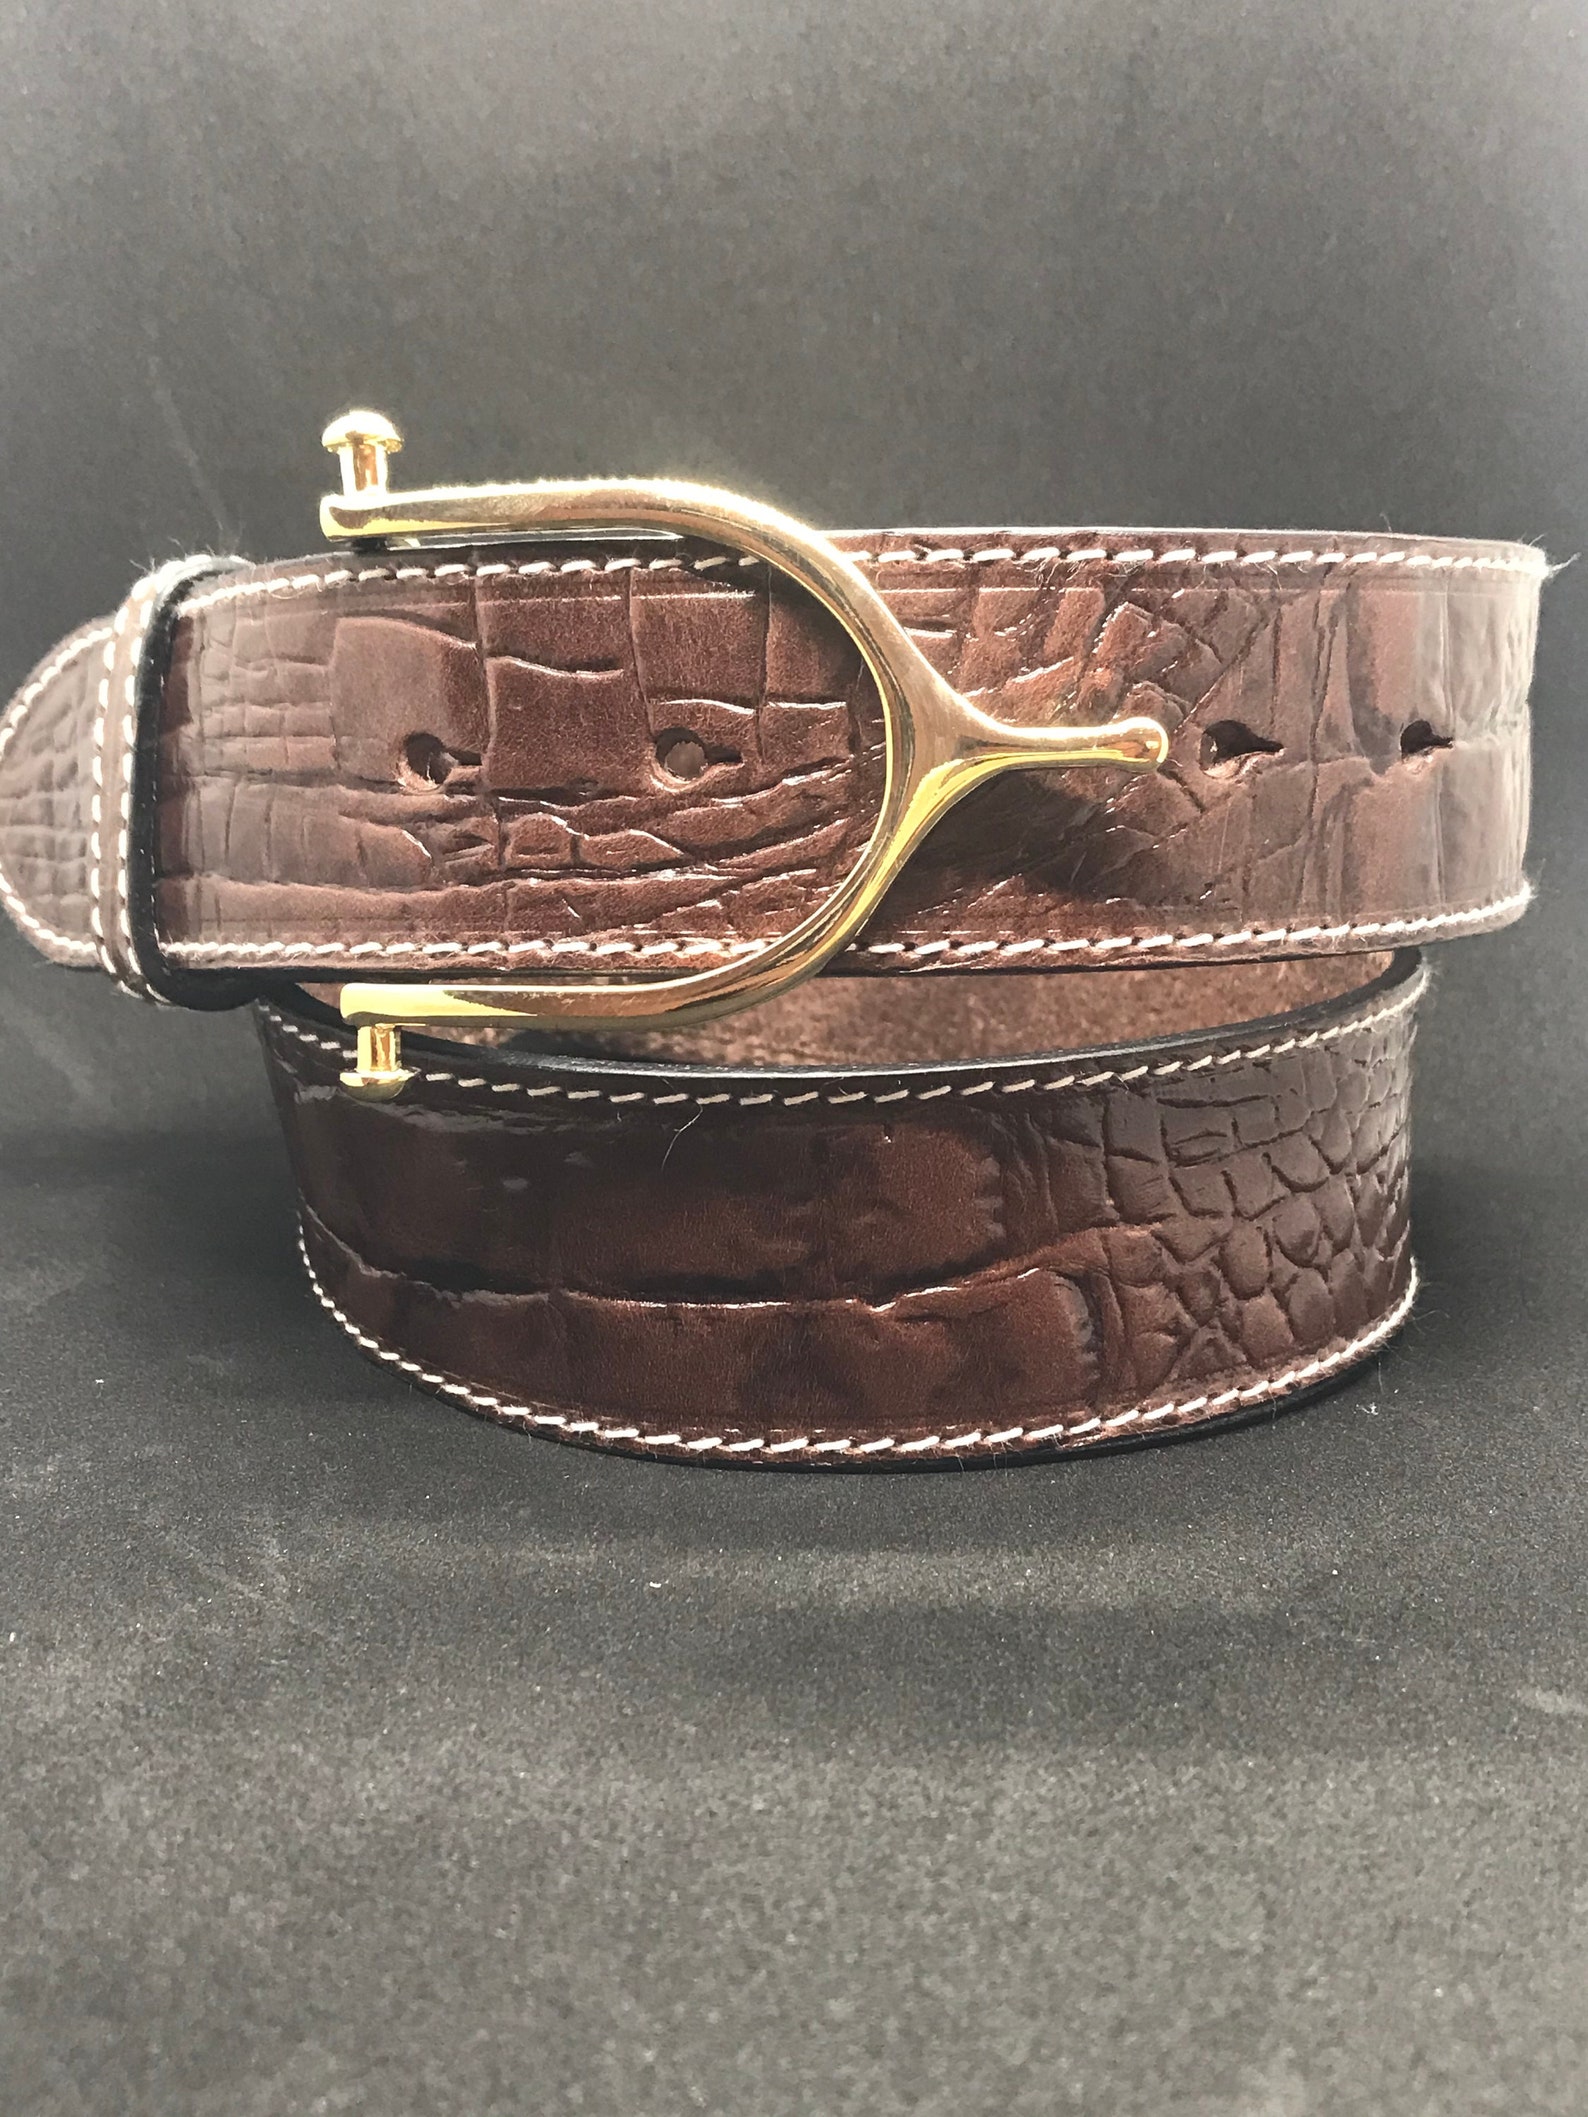 Leather Belt in Dark Brown Embossed with Crocodile Pattern. | Etsy